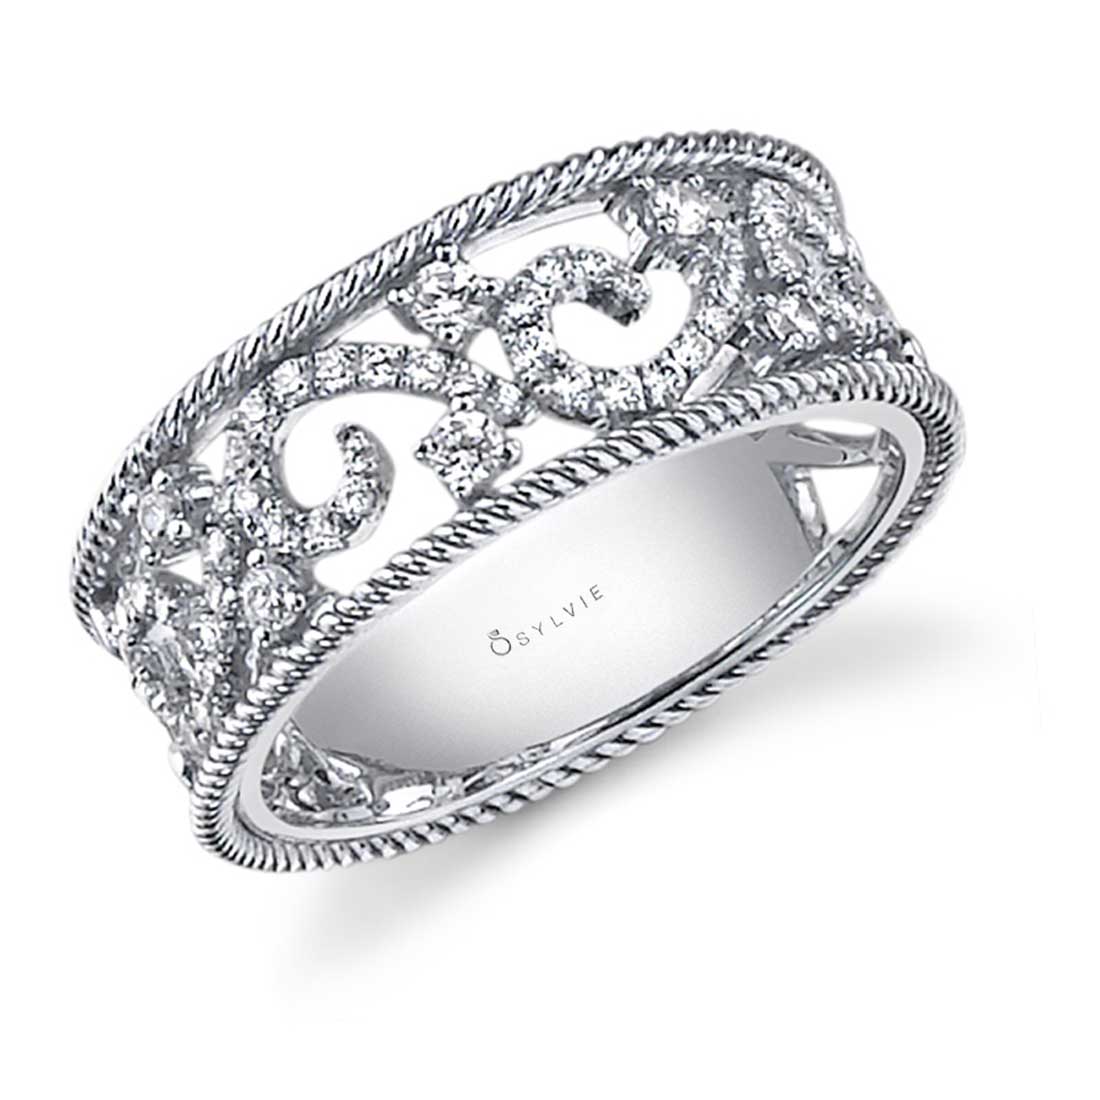 Vintage Inspired Diamond Fashion Ring